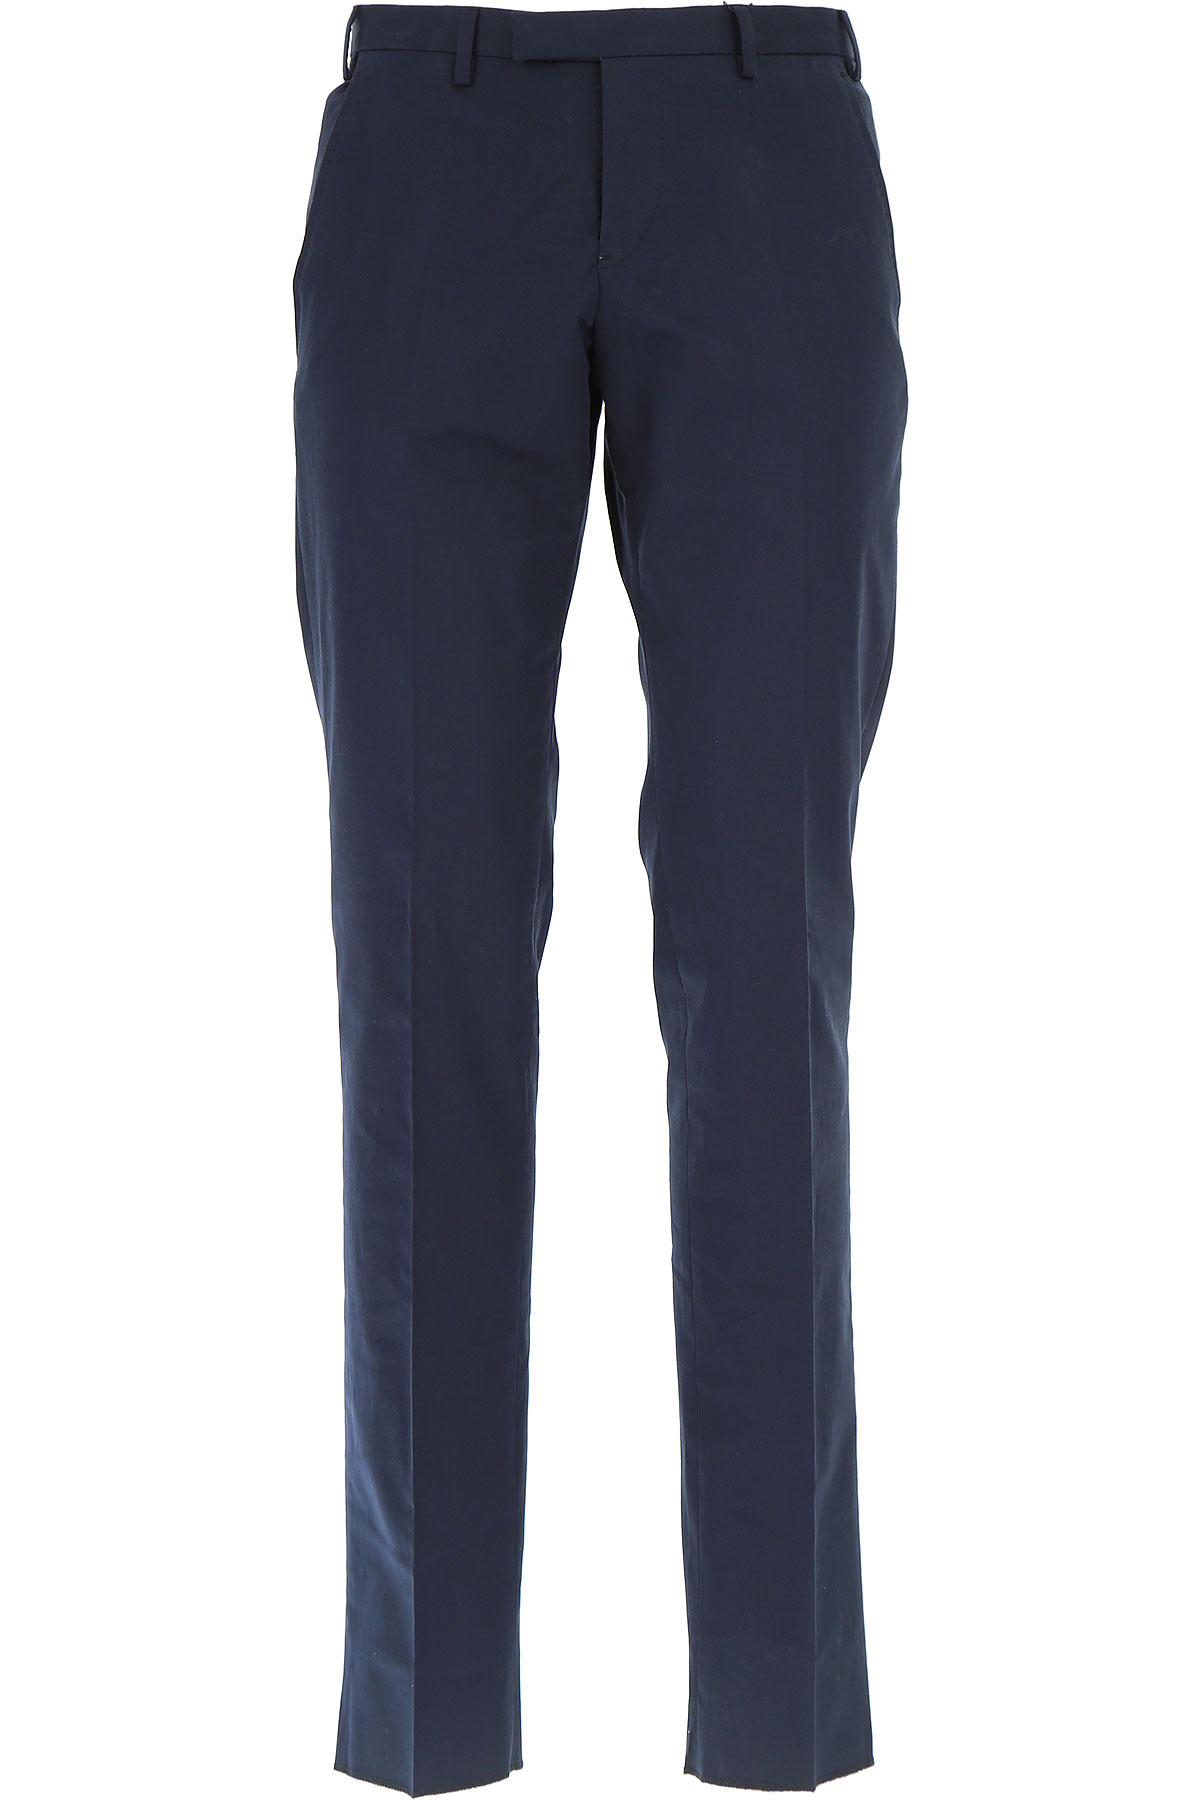 Emporio Armani Pantalon Homme, Bleu marine, Coton, 2017, 46 48 50 52